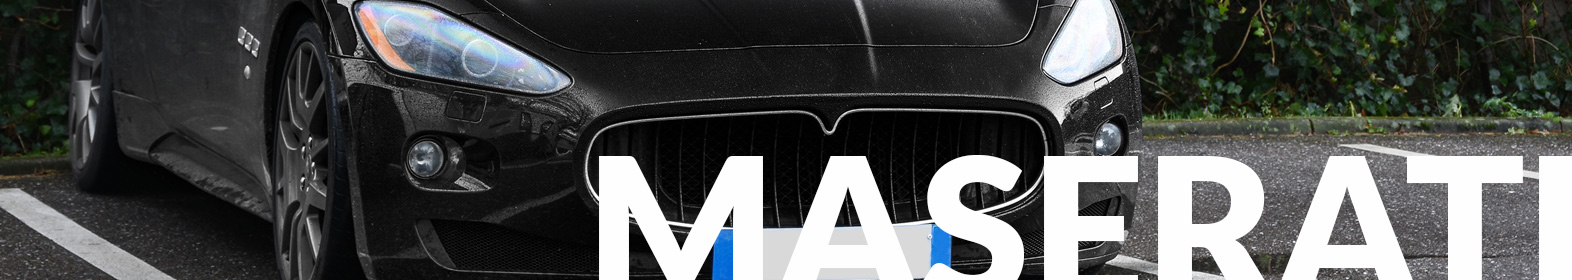 Maserati Banner | Yates Collision